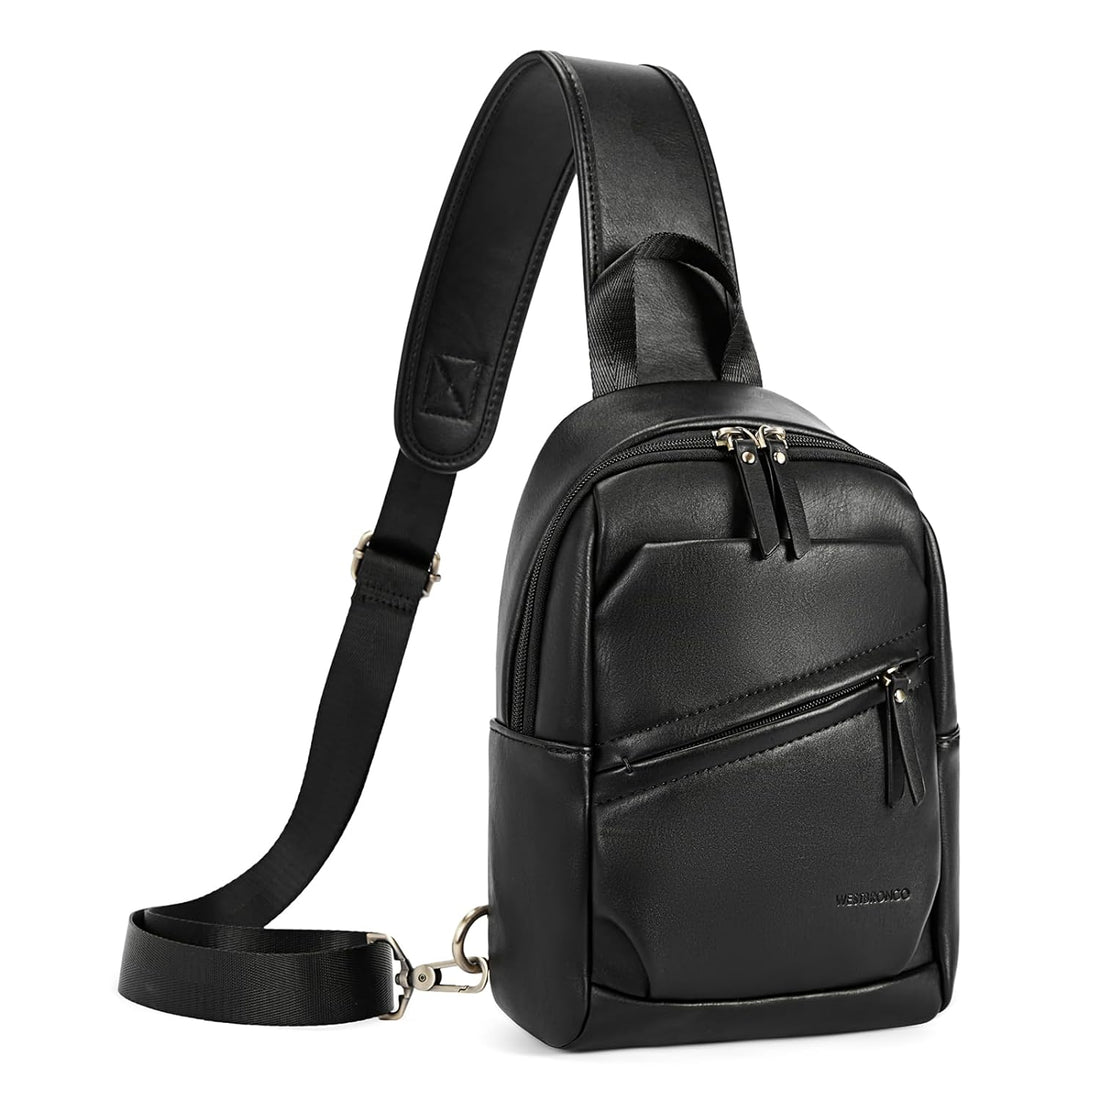 WESTBRONCO Sling Bags for Men, Vegan Leather Waterproof Crossbody Shoulder Backpack with Adjustable Strap for Travel